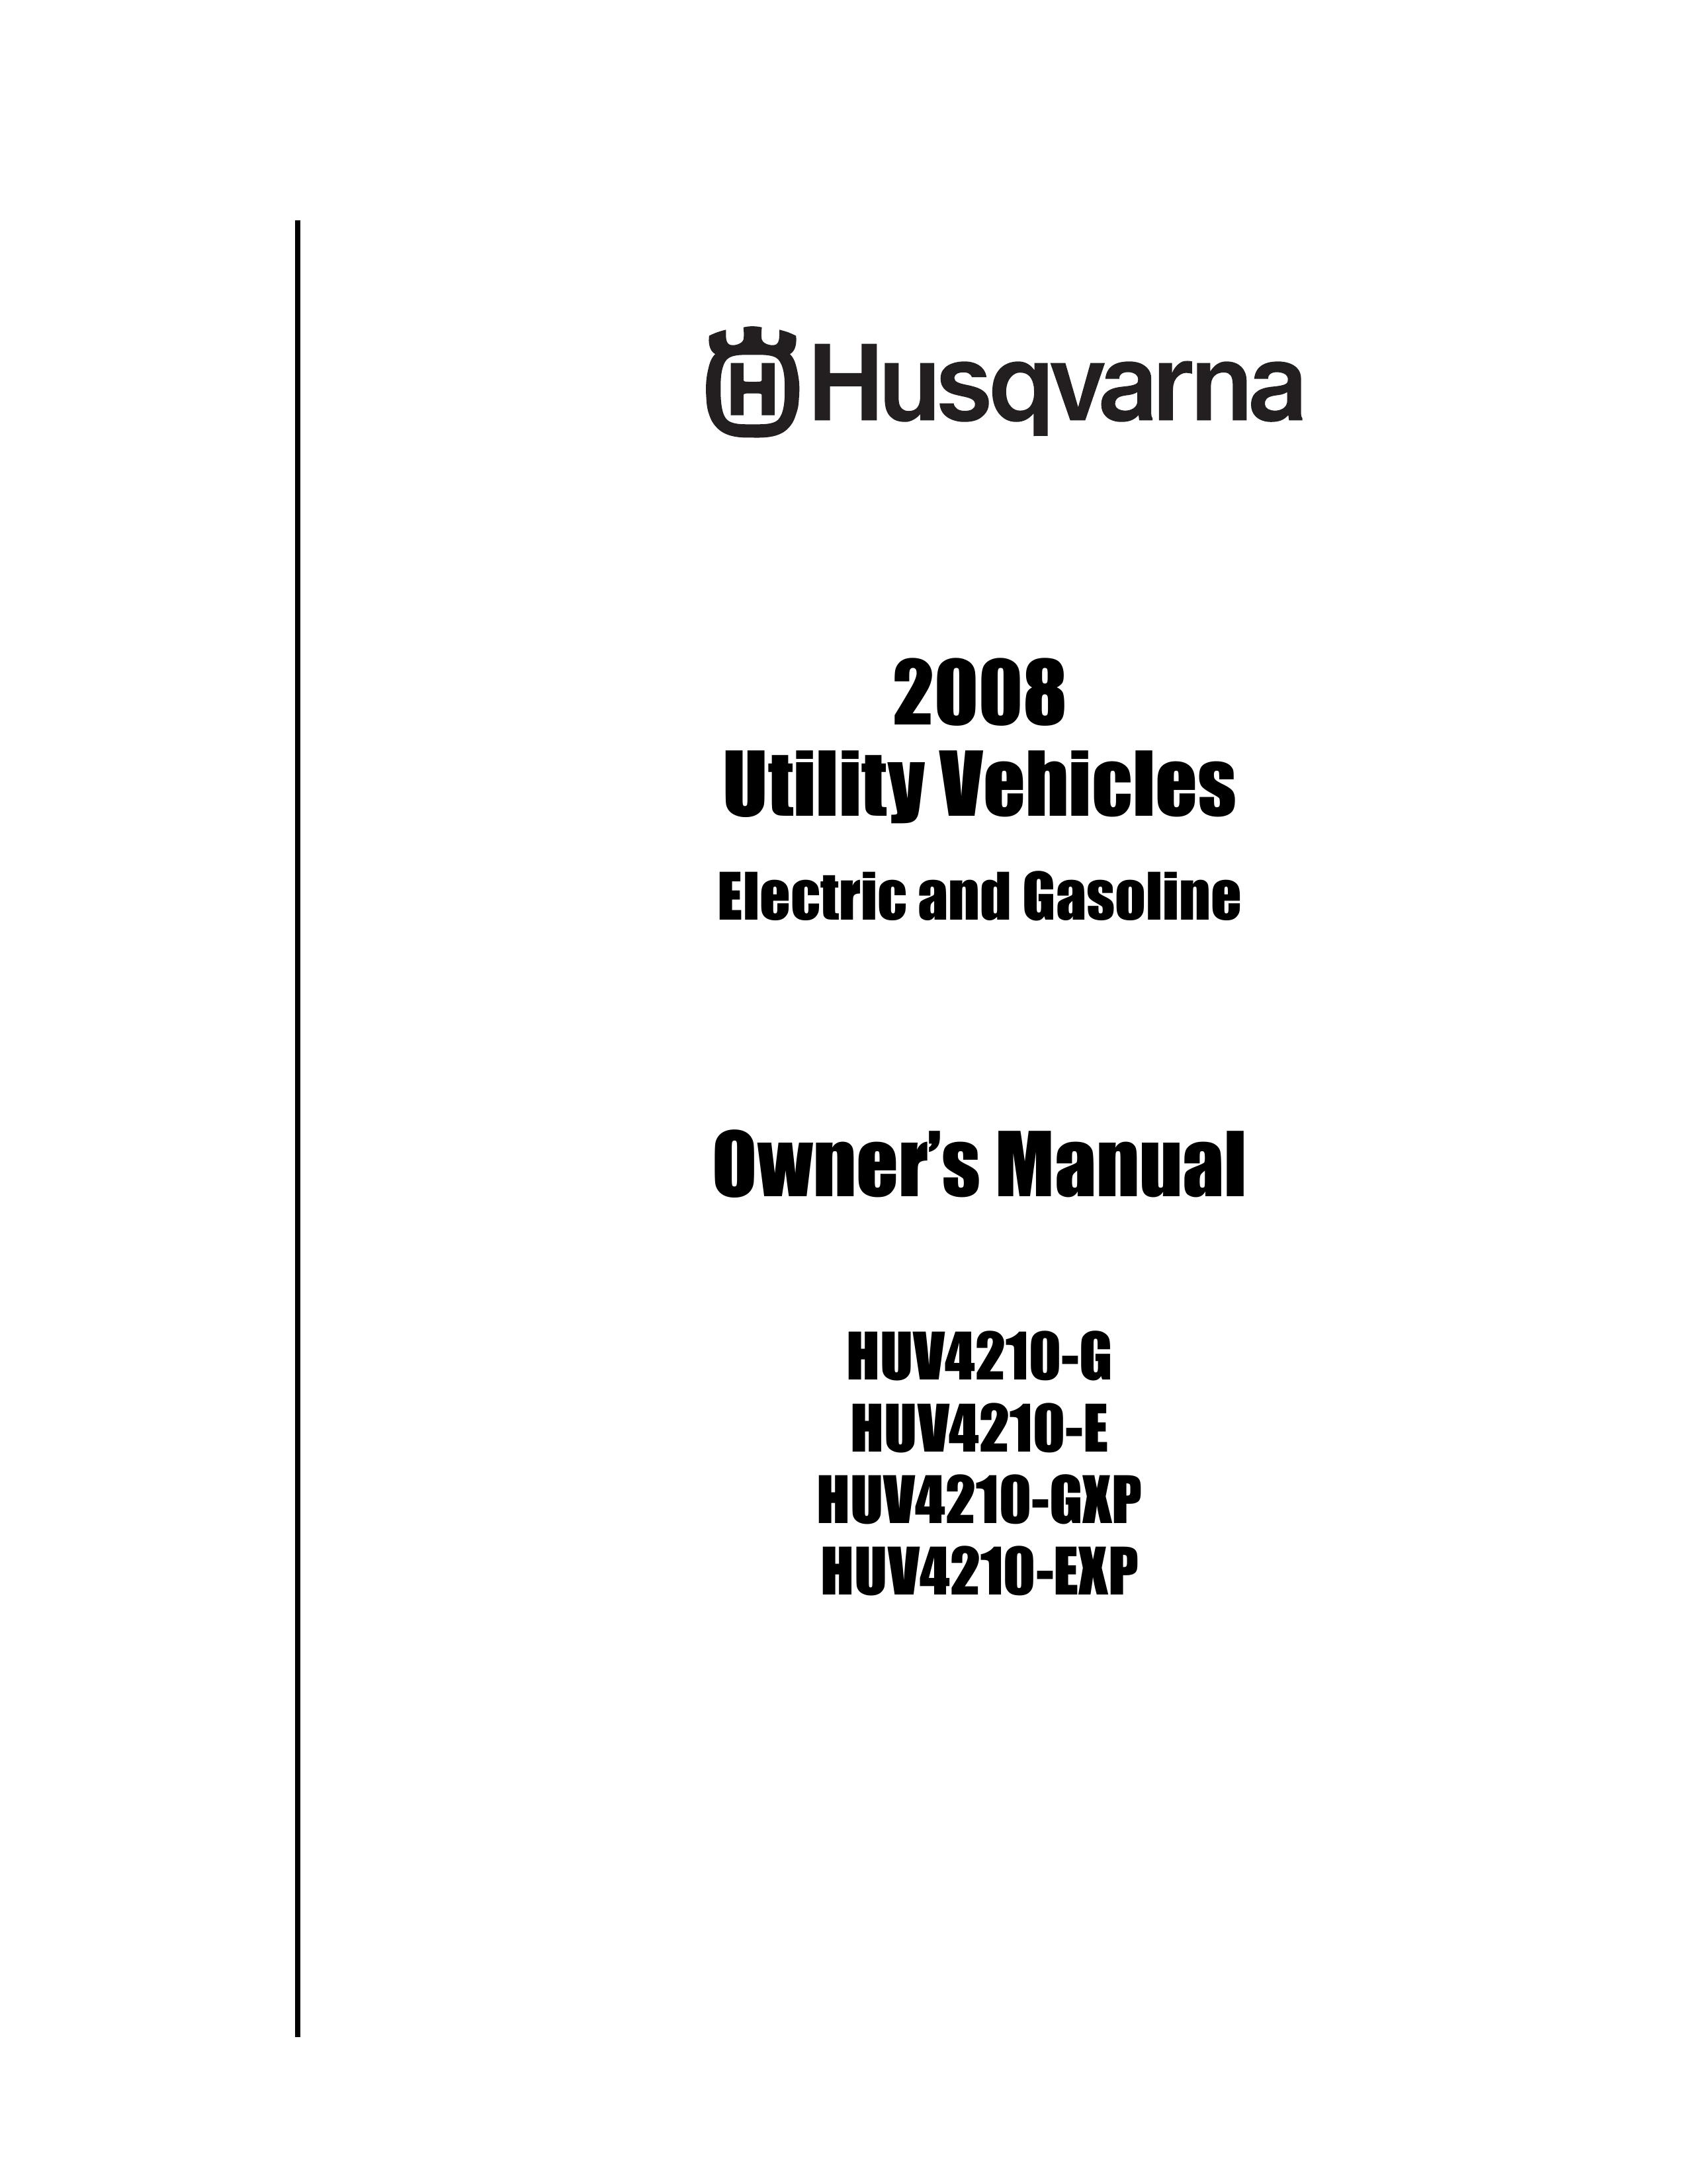 Husqvarna HUV4210-EXP Utility Vehicle User Manual